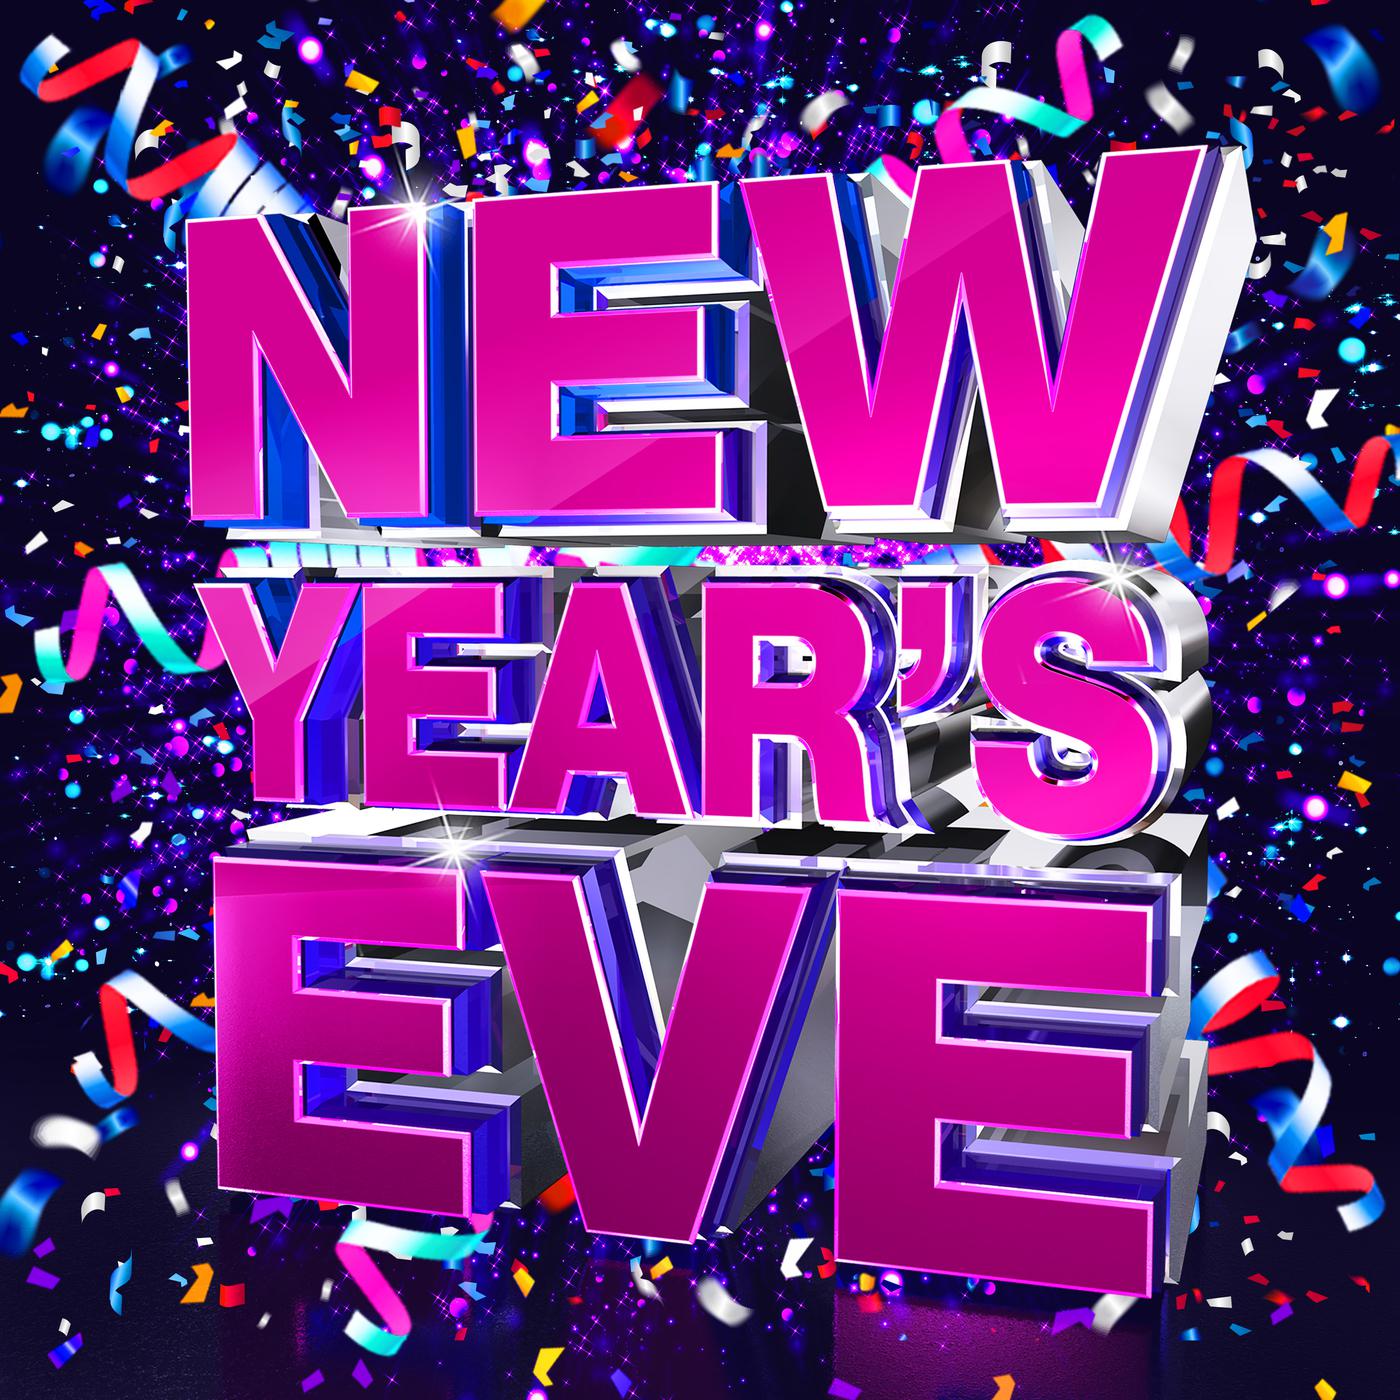 All Falls Down歌词 歌手Alan Walker / Noah Cyrus / Digital Farm Animals / Juliander-专辑New Year's Eve - NYE 2018/2019-单曲《All Falls Down》LRC歌词下载